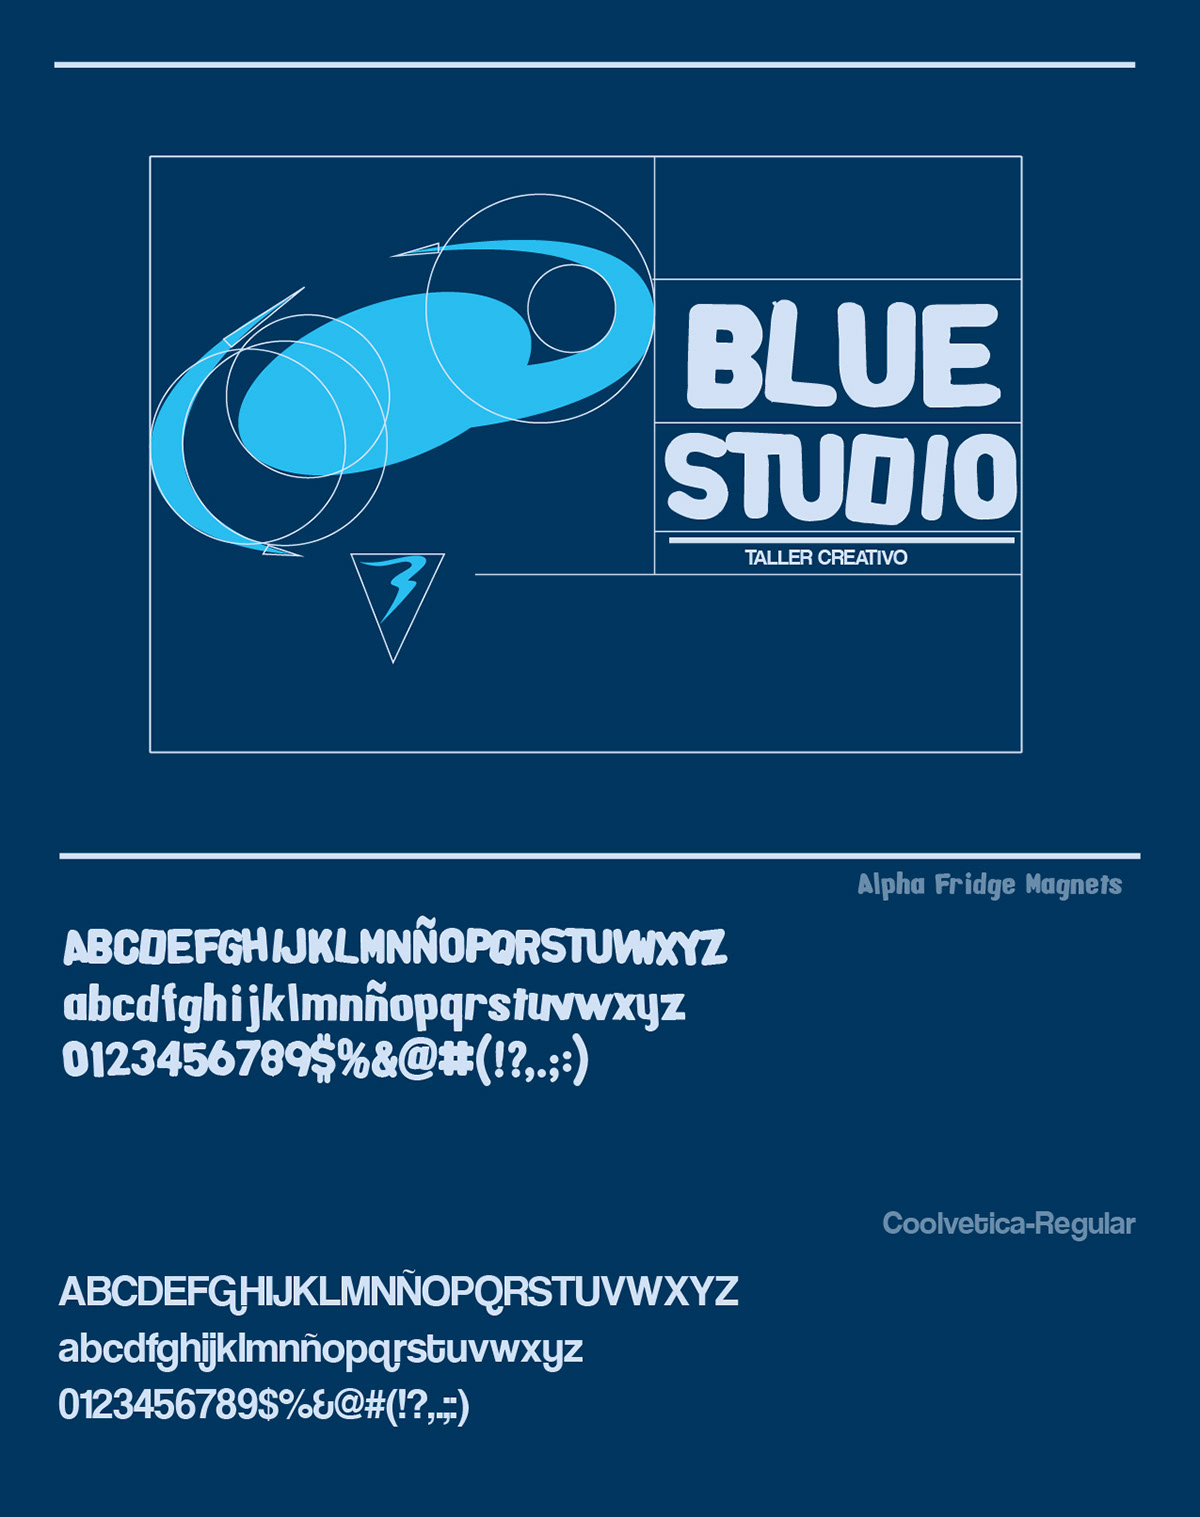 piru zeraus logo bran blue studio blue indenty Identidad Corporativa